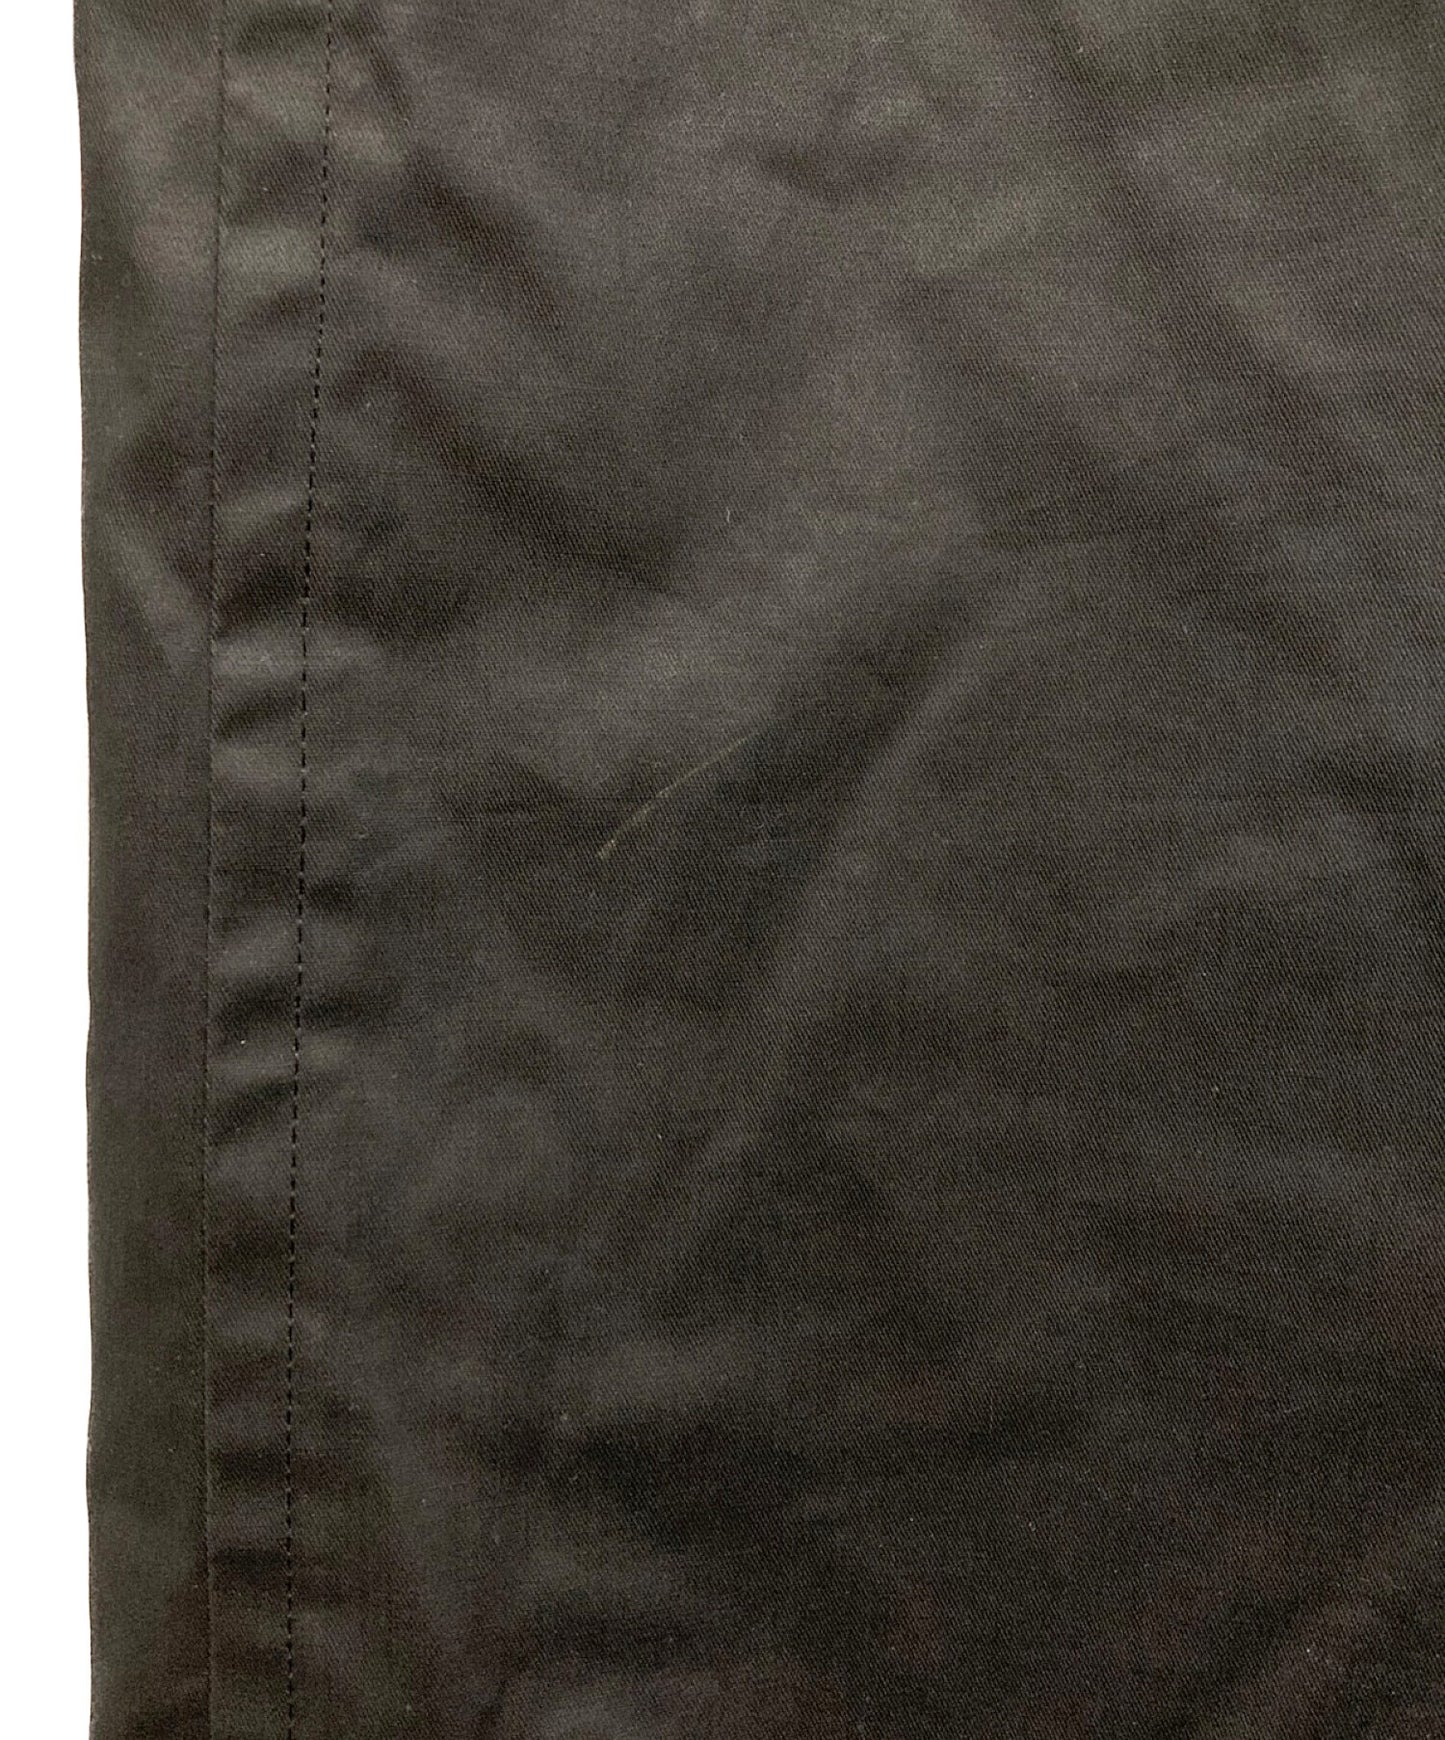 [Pre-owned] COMME des GARCONS HOMME Oversized coated cotton coat HC-04001M